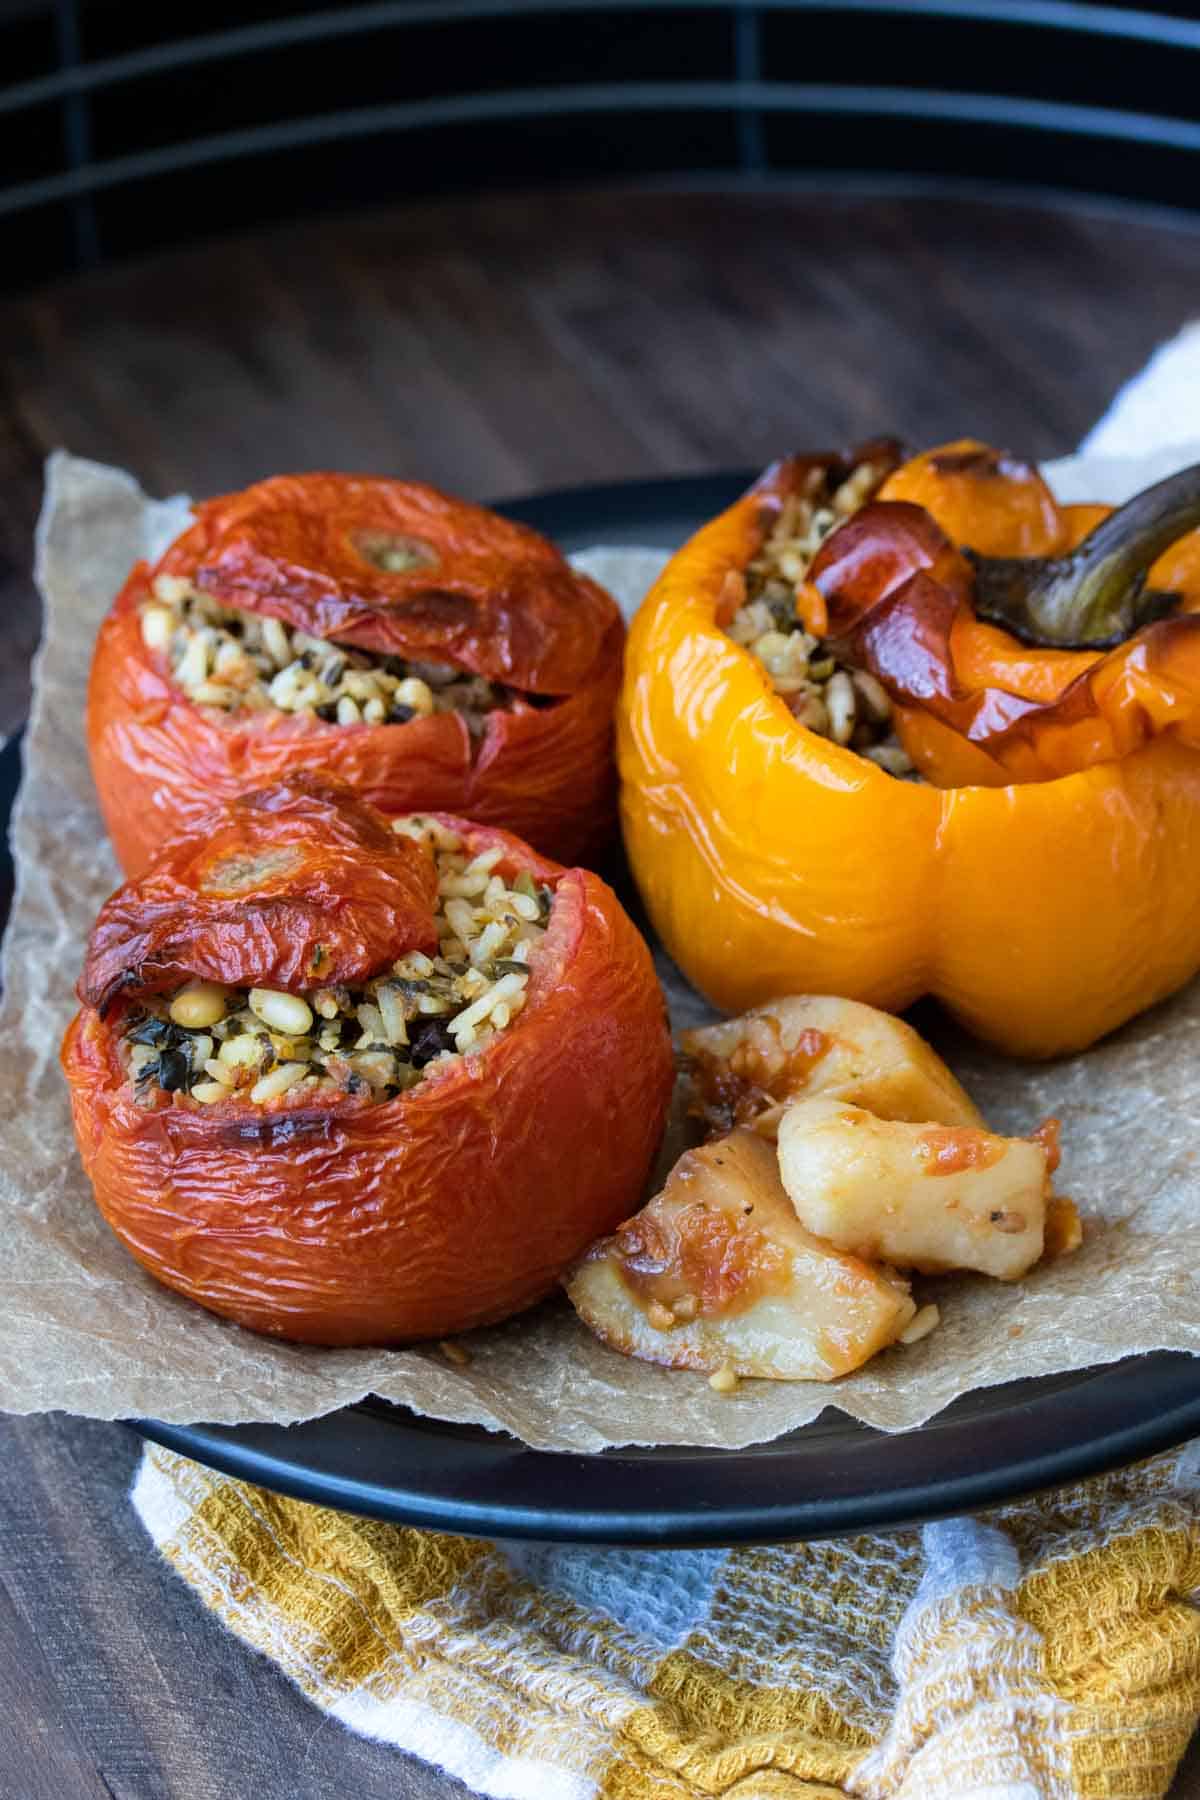 Two stuffed tomatoes and one stuffed orange pepper on a black plate